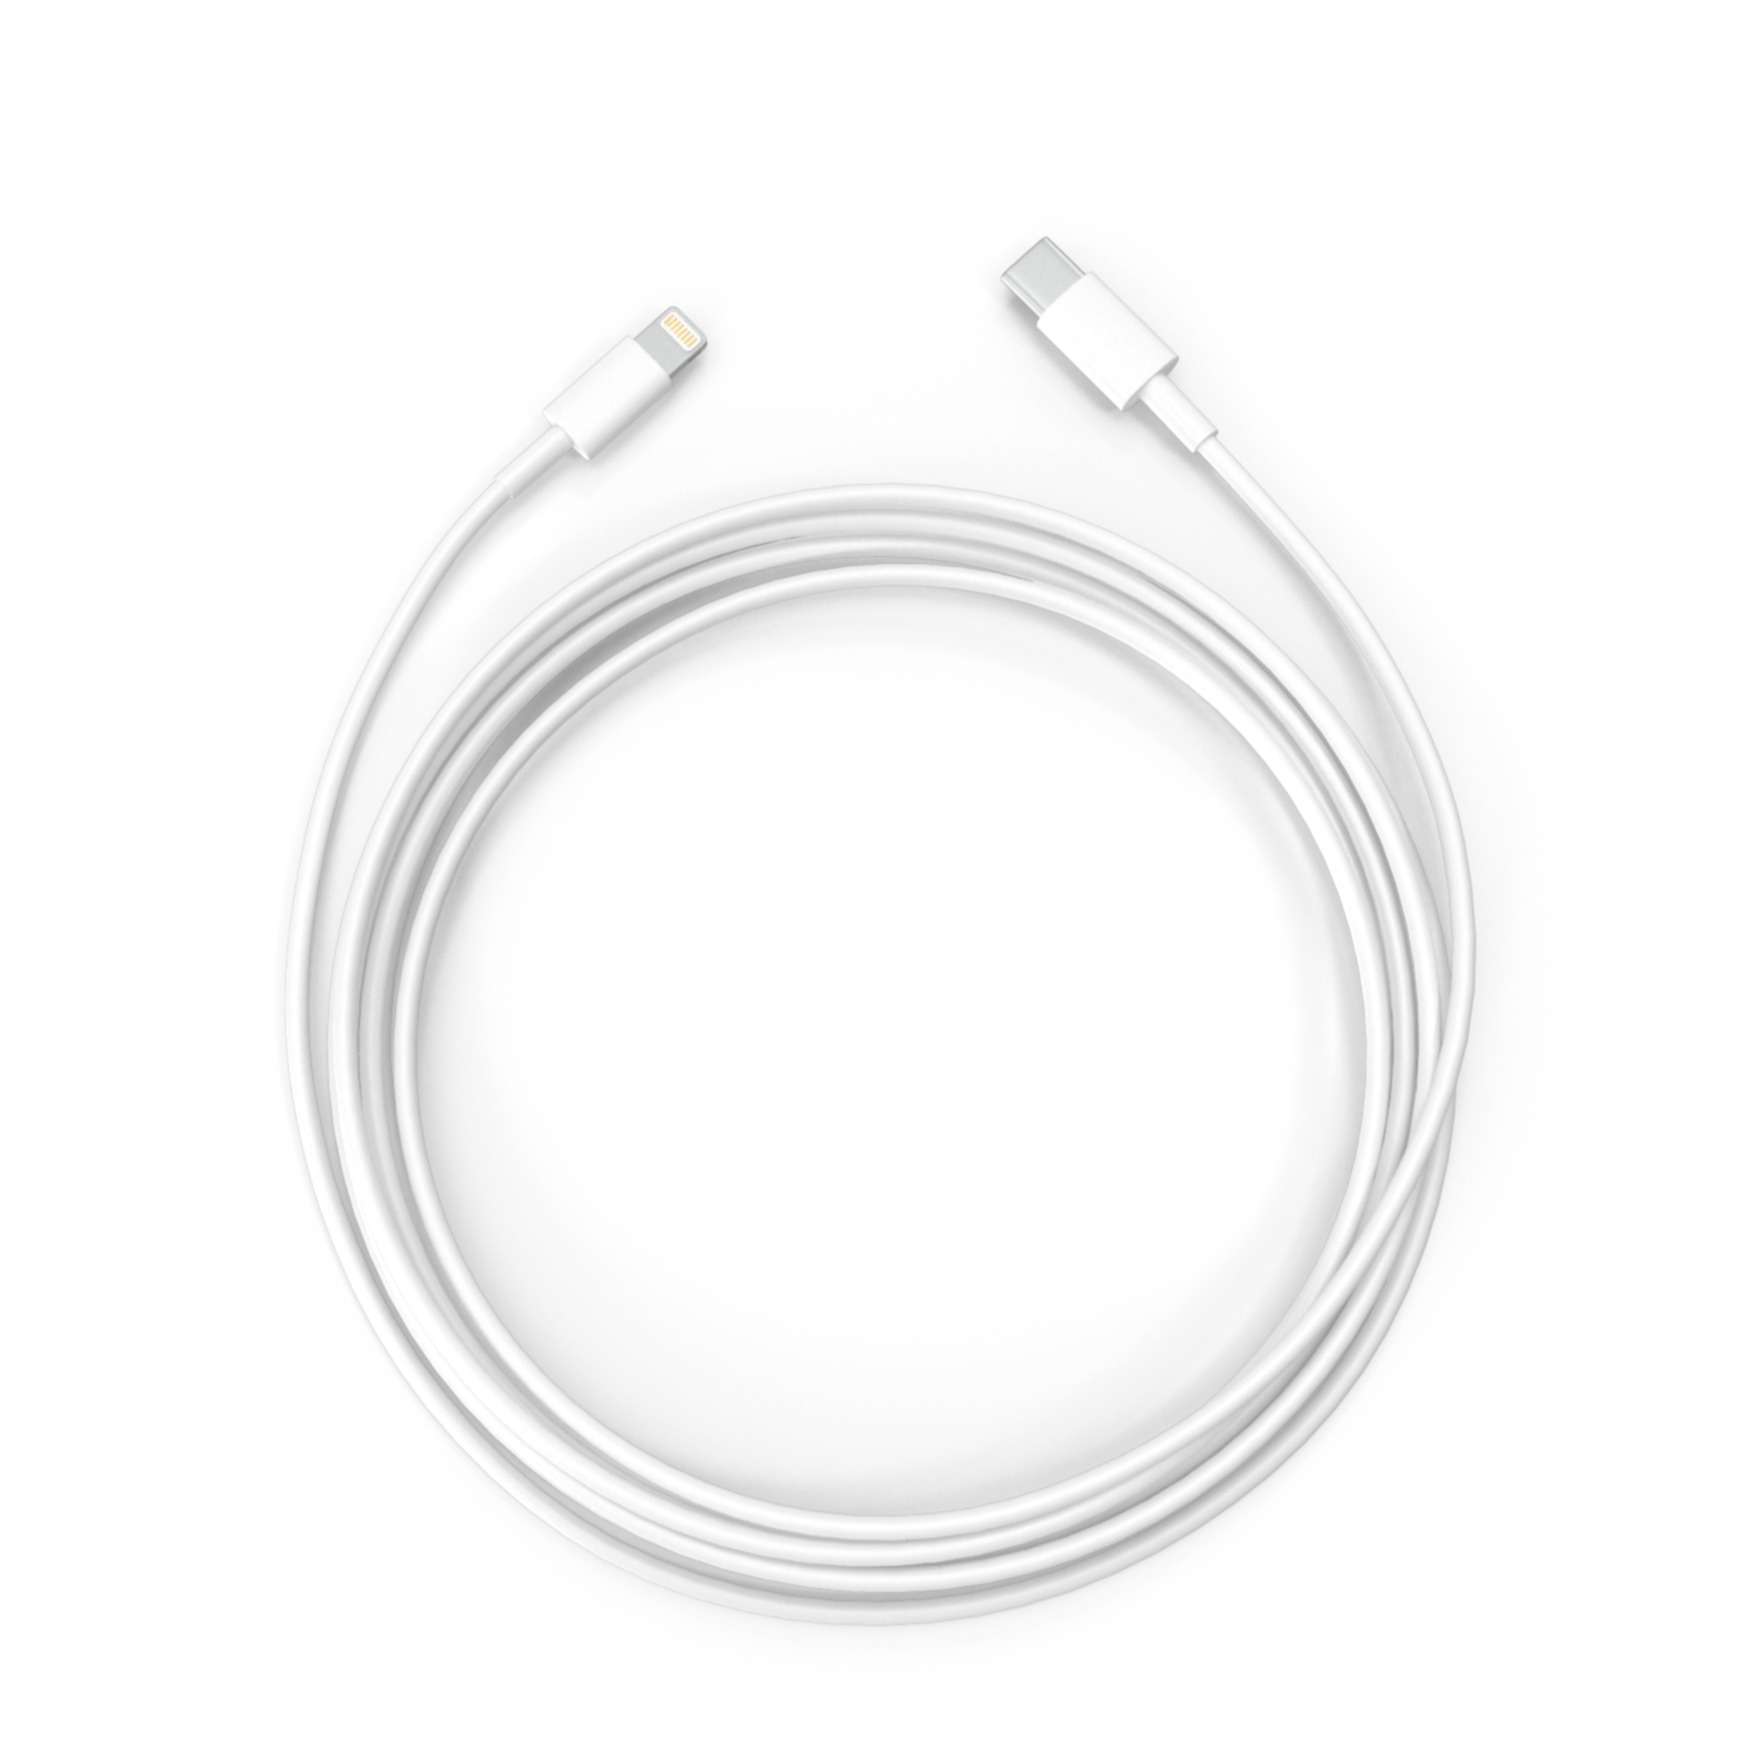 Image of Apple - (1m) iPhone 13 Pro Max Lightning auf USB C Ladekabel Datenkabel MK0X2ZM/A - Weiss bei Apfelkiste.ch